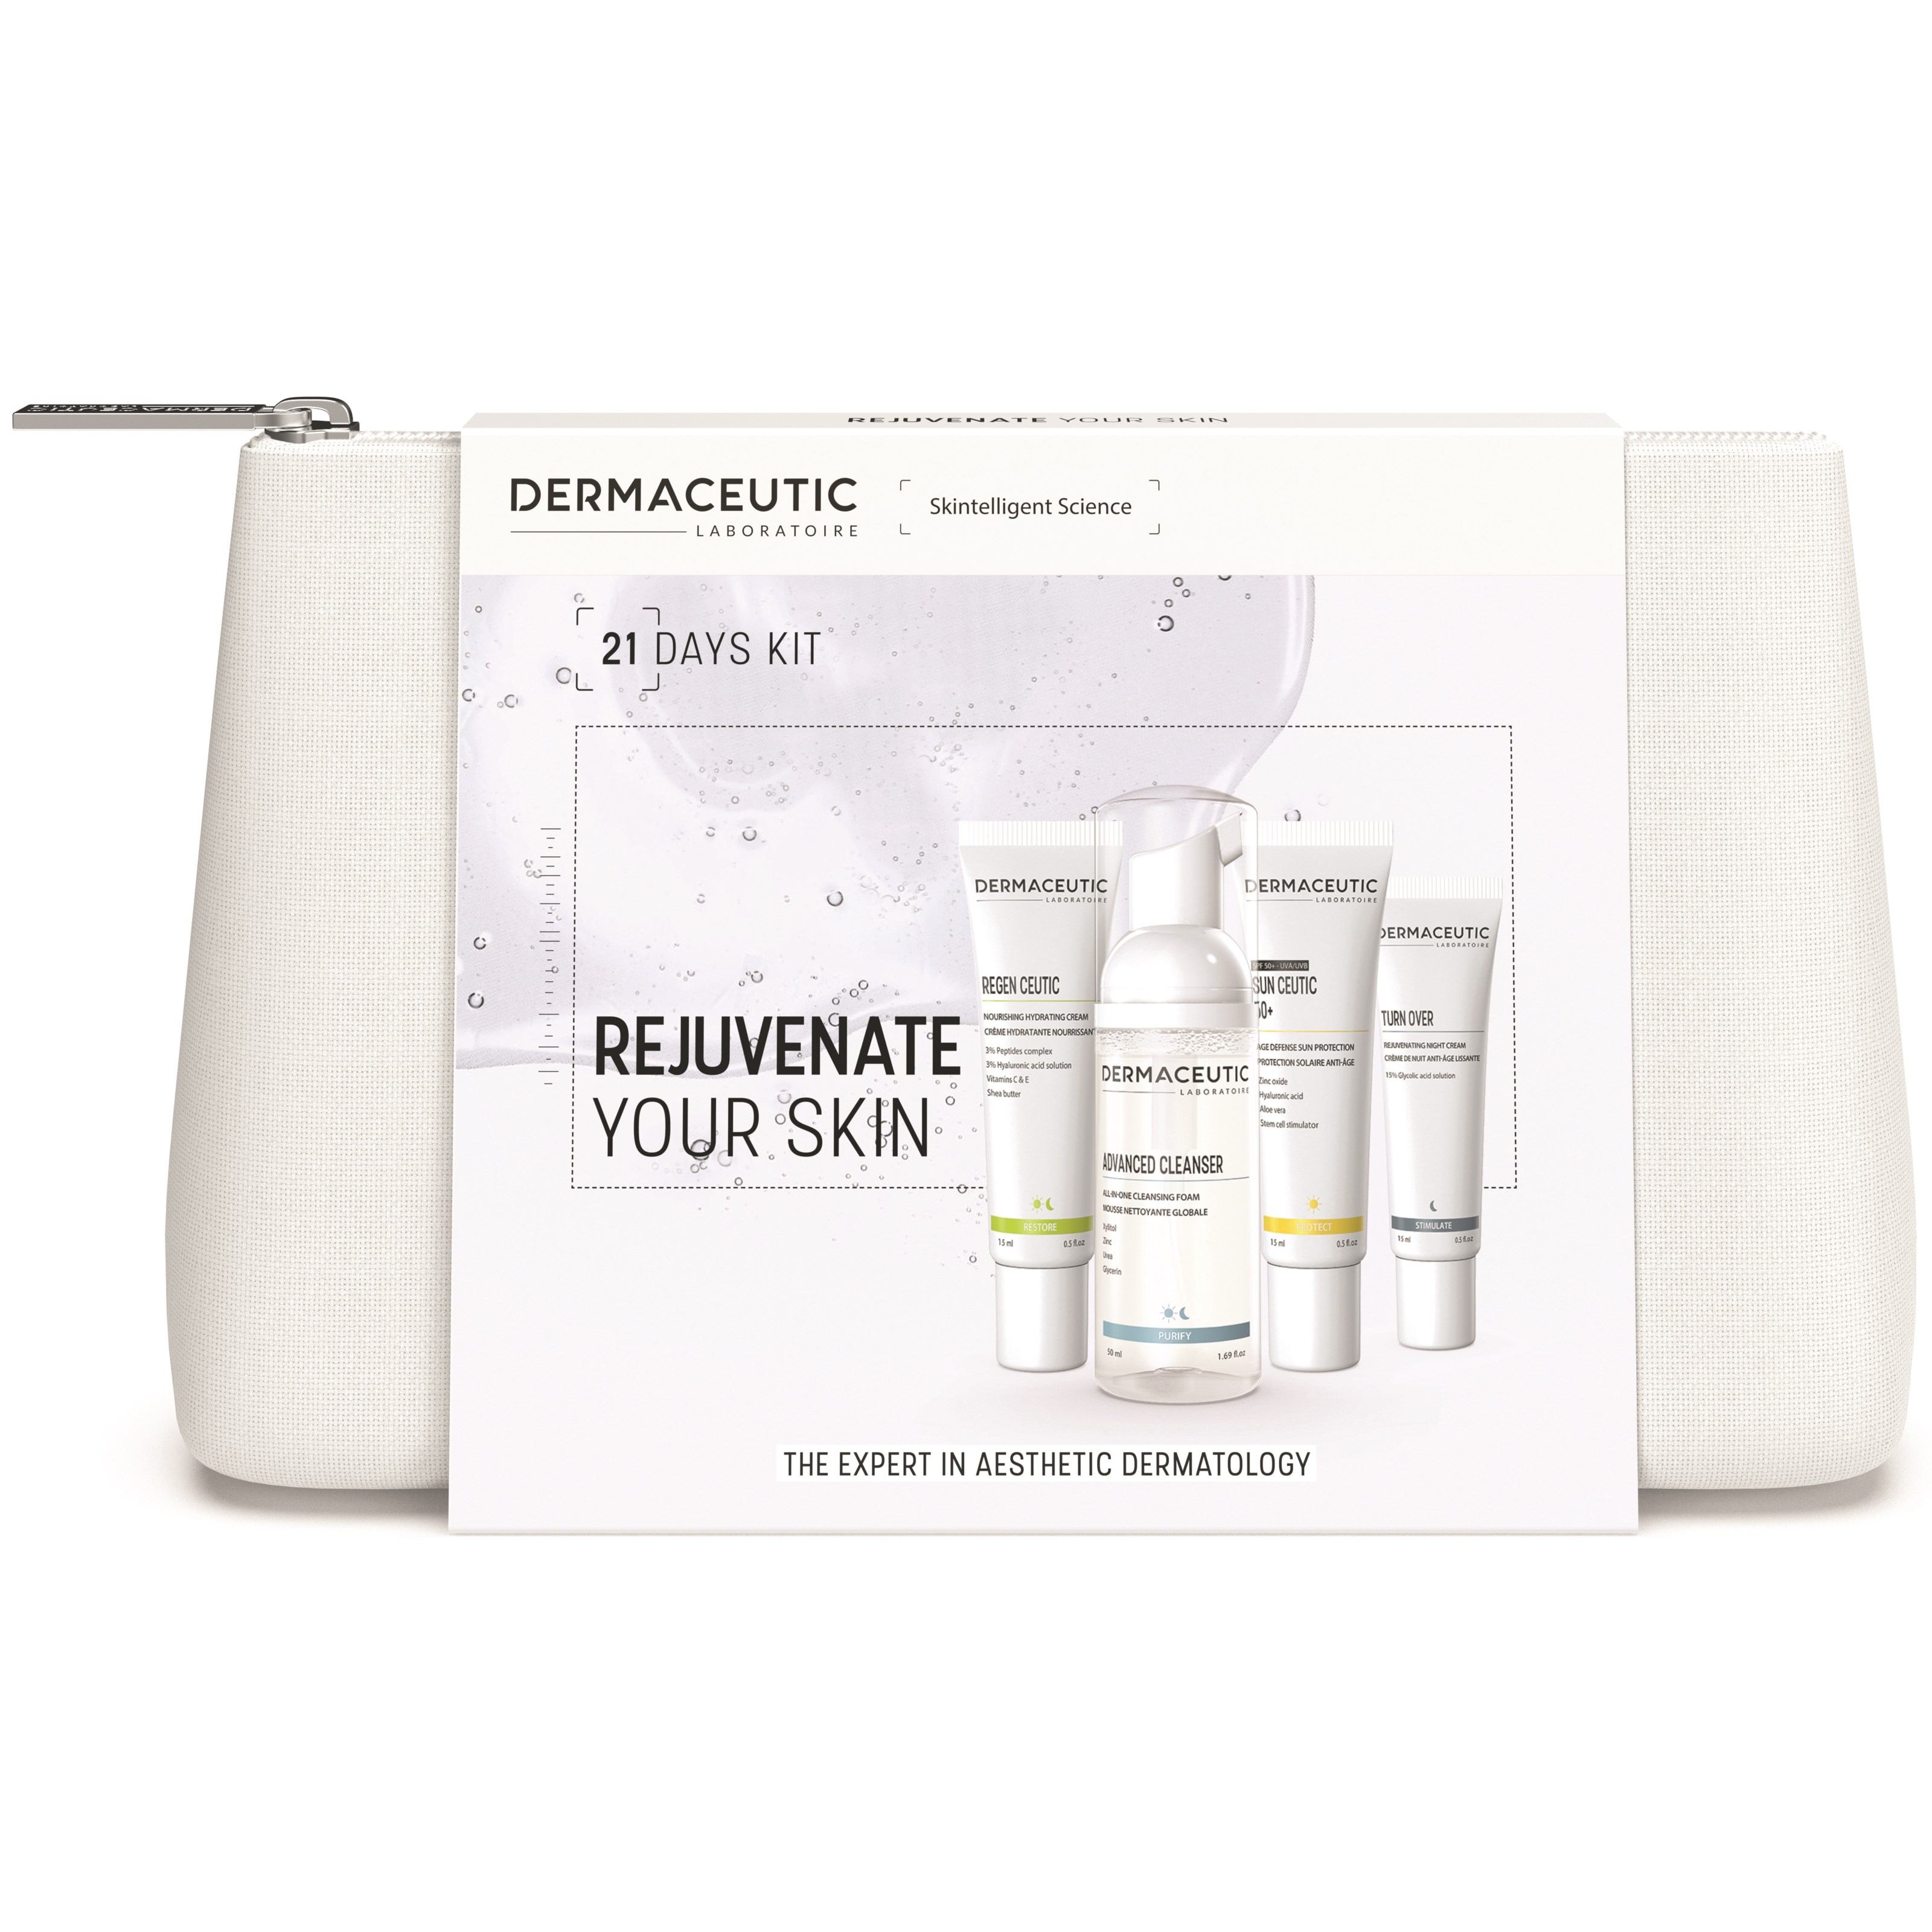 Dermaceutic 21 Days Kit Rejuvenate Your Skin